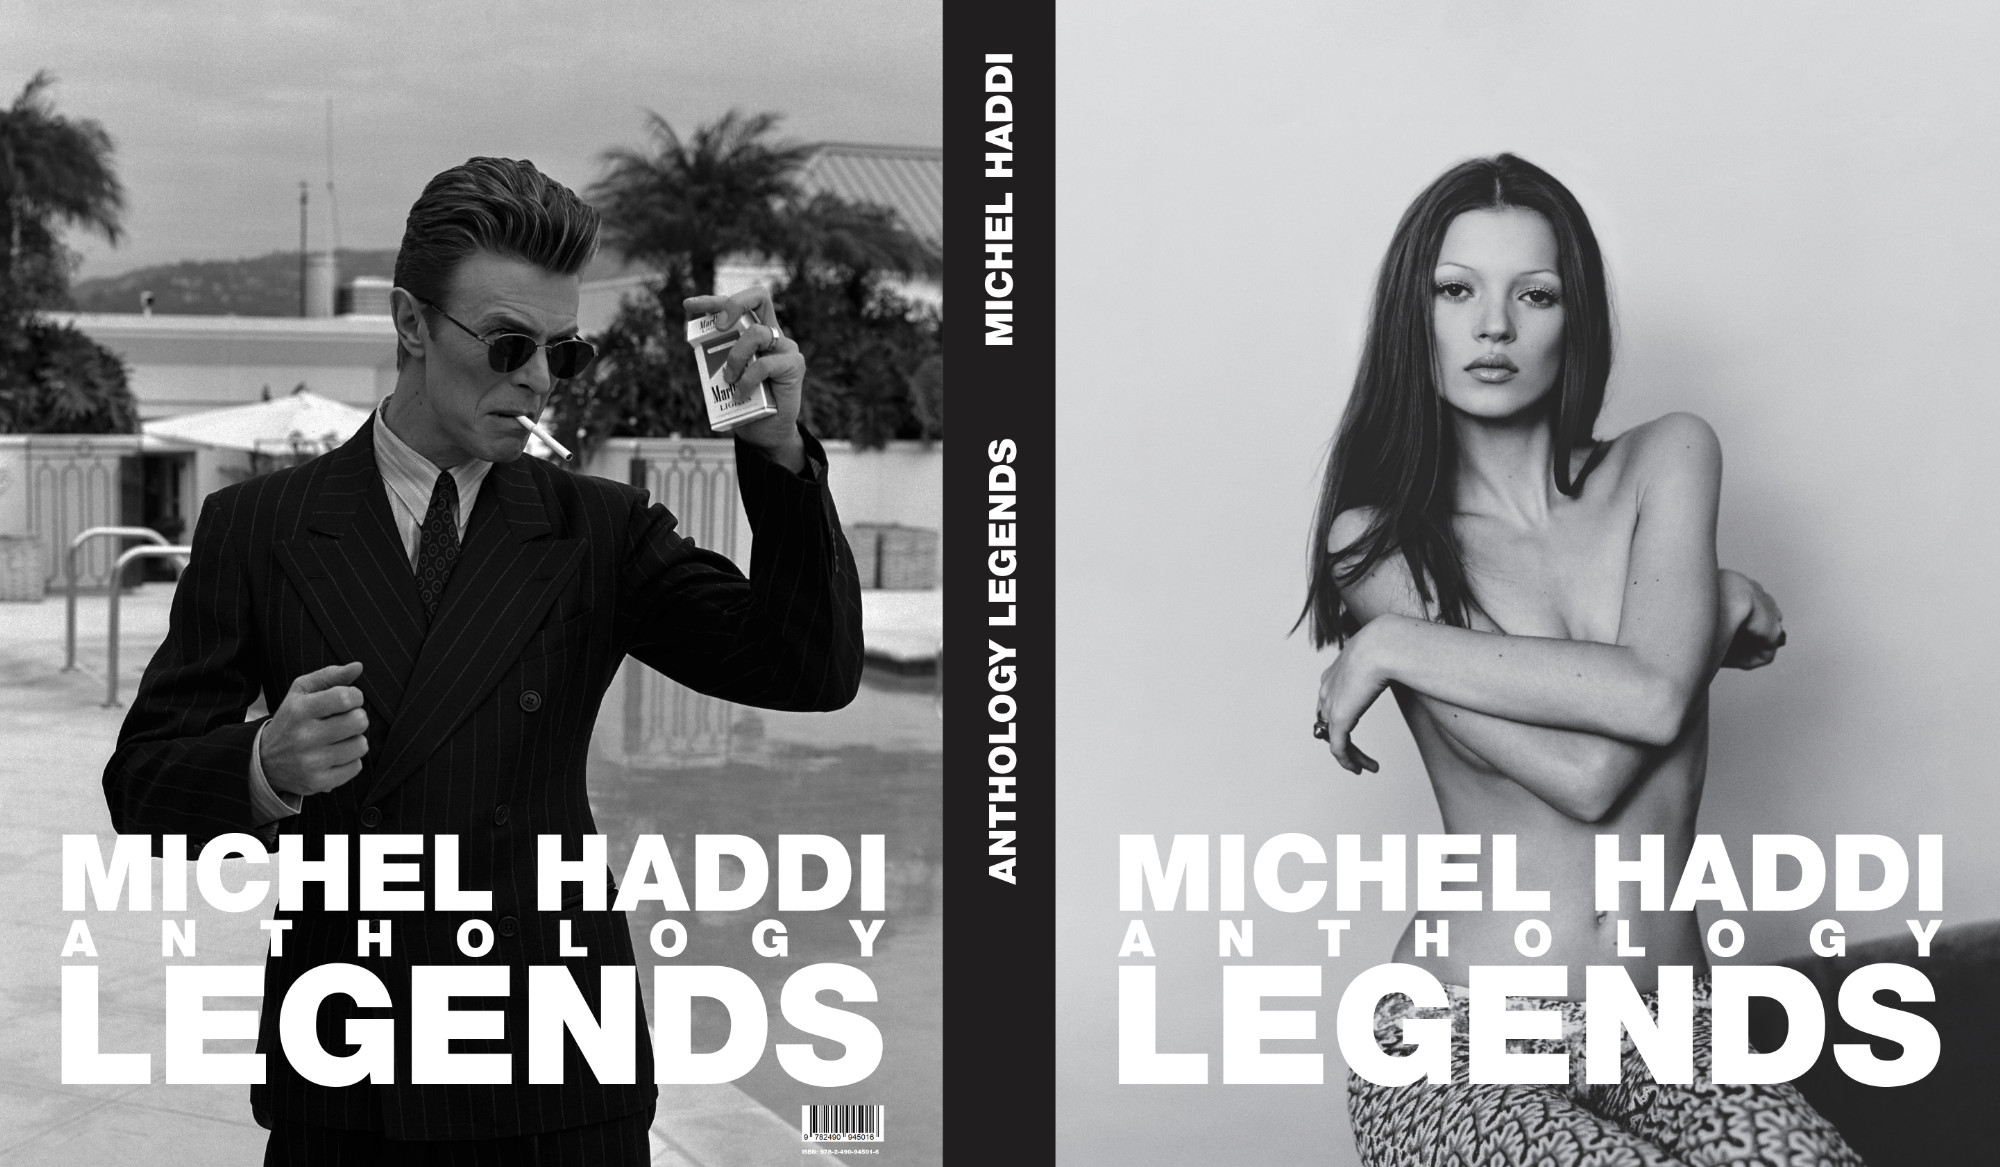 Anthology Legends - David Bowie by Michel Haddi